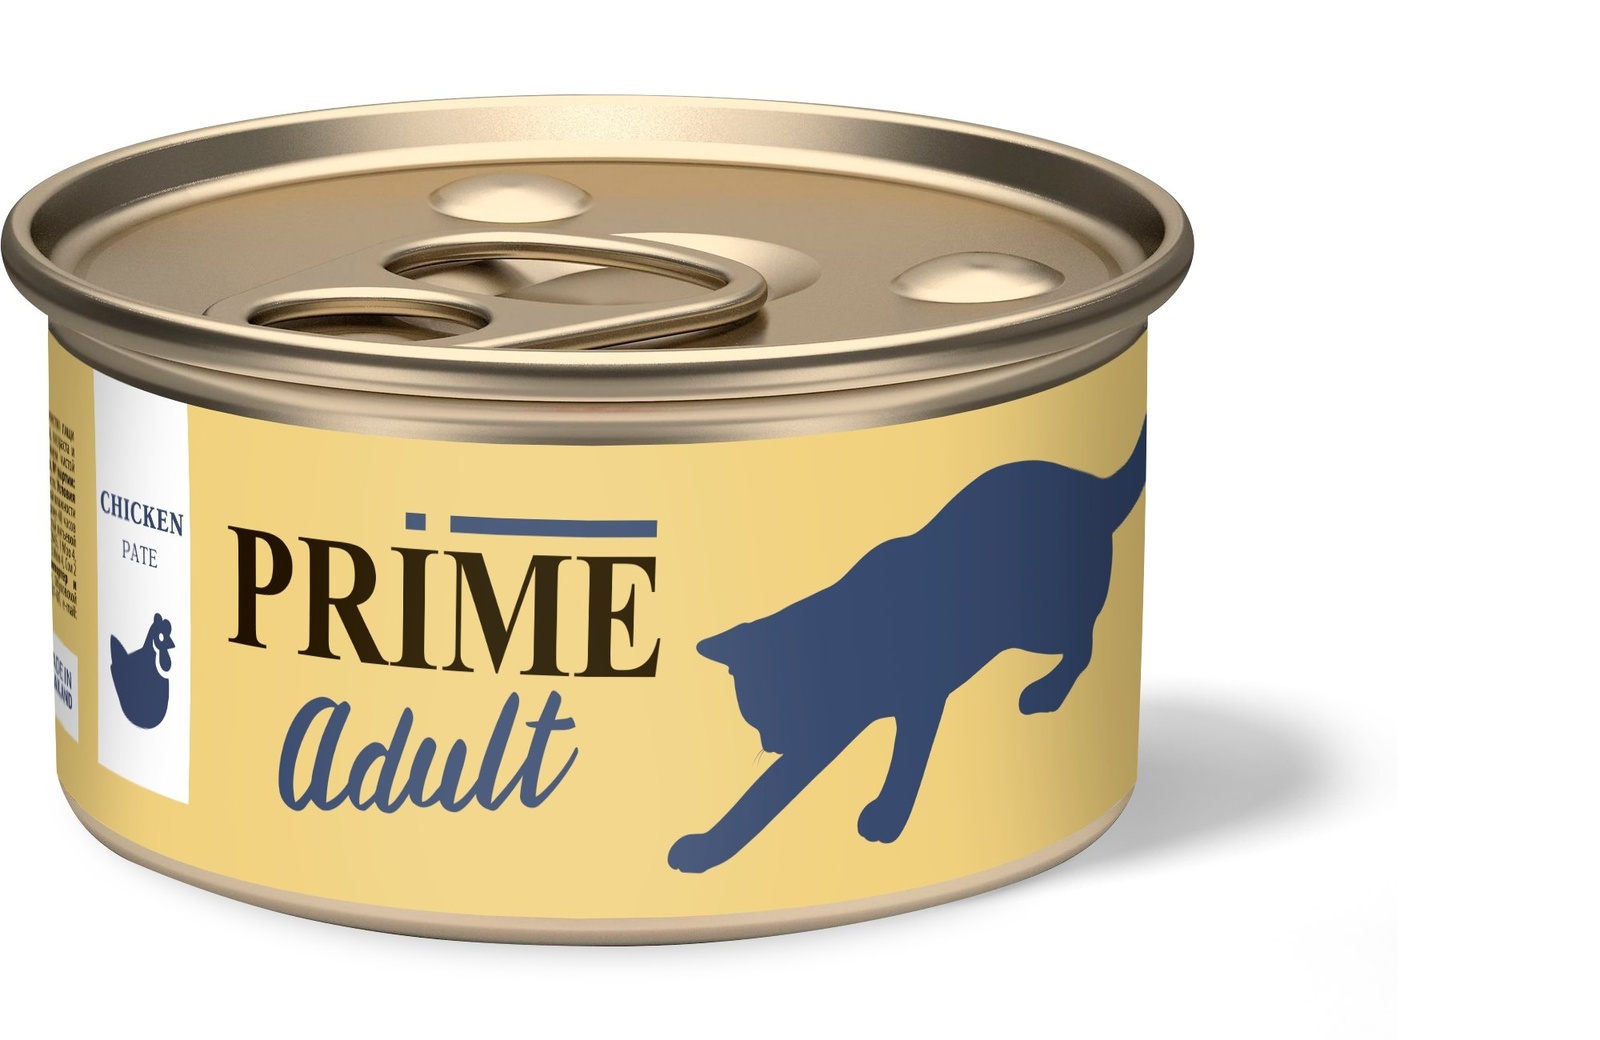 Prime Prime консервы паштет с курицей для кошек (75 г) prime prime консервы для кошек тунец в собственном соку 70 г